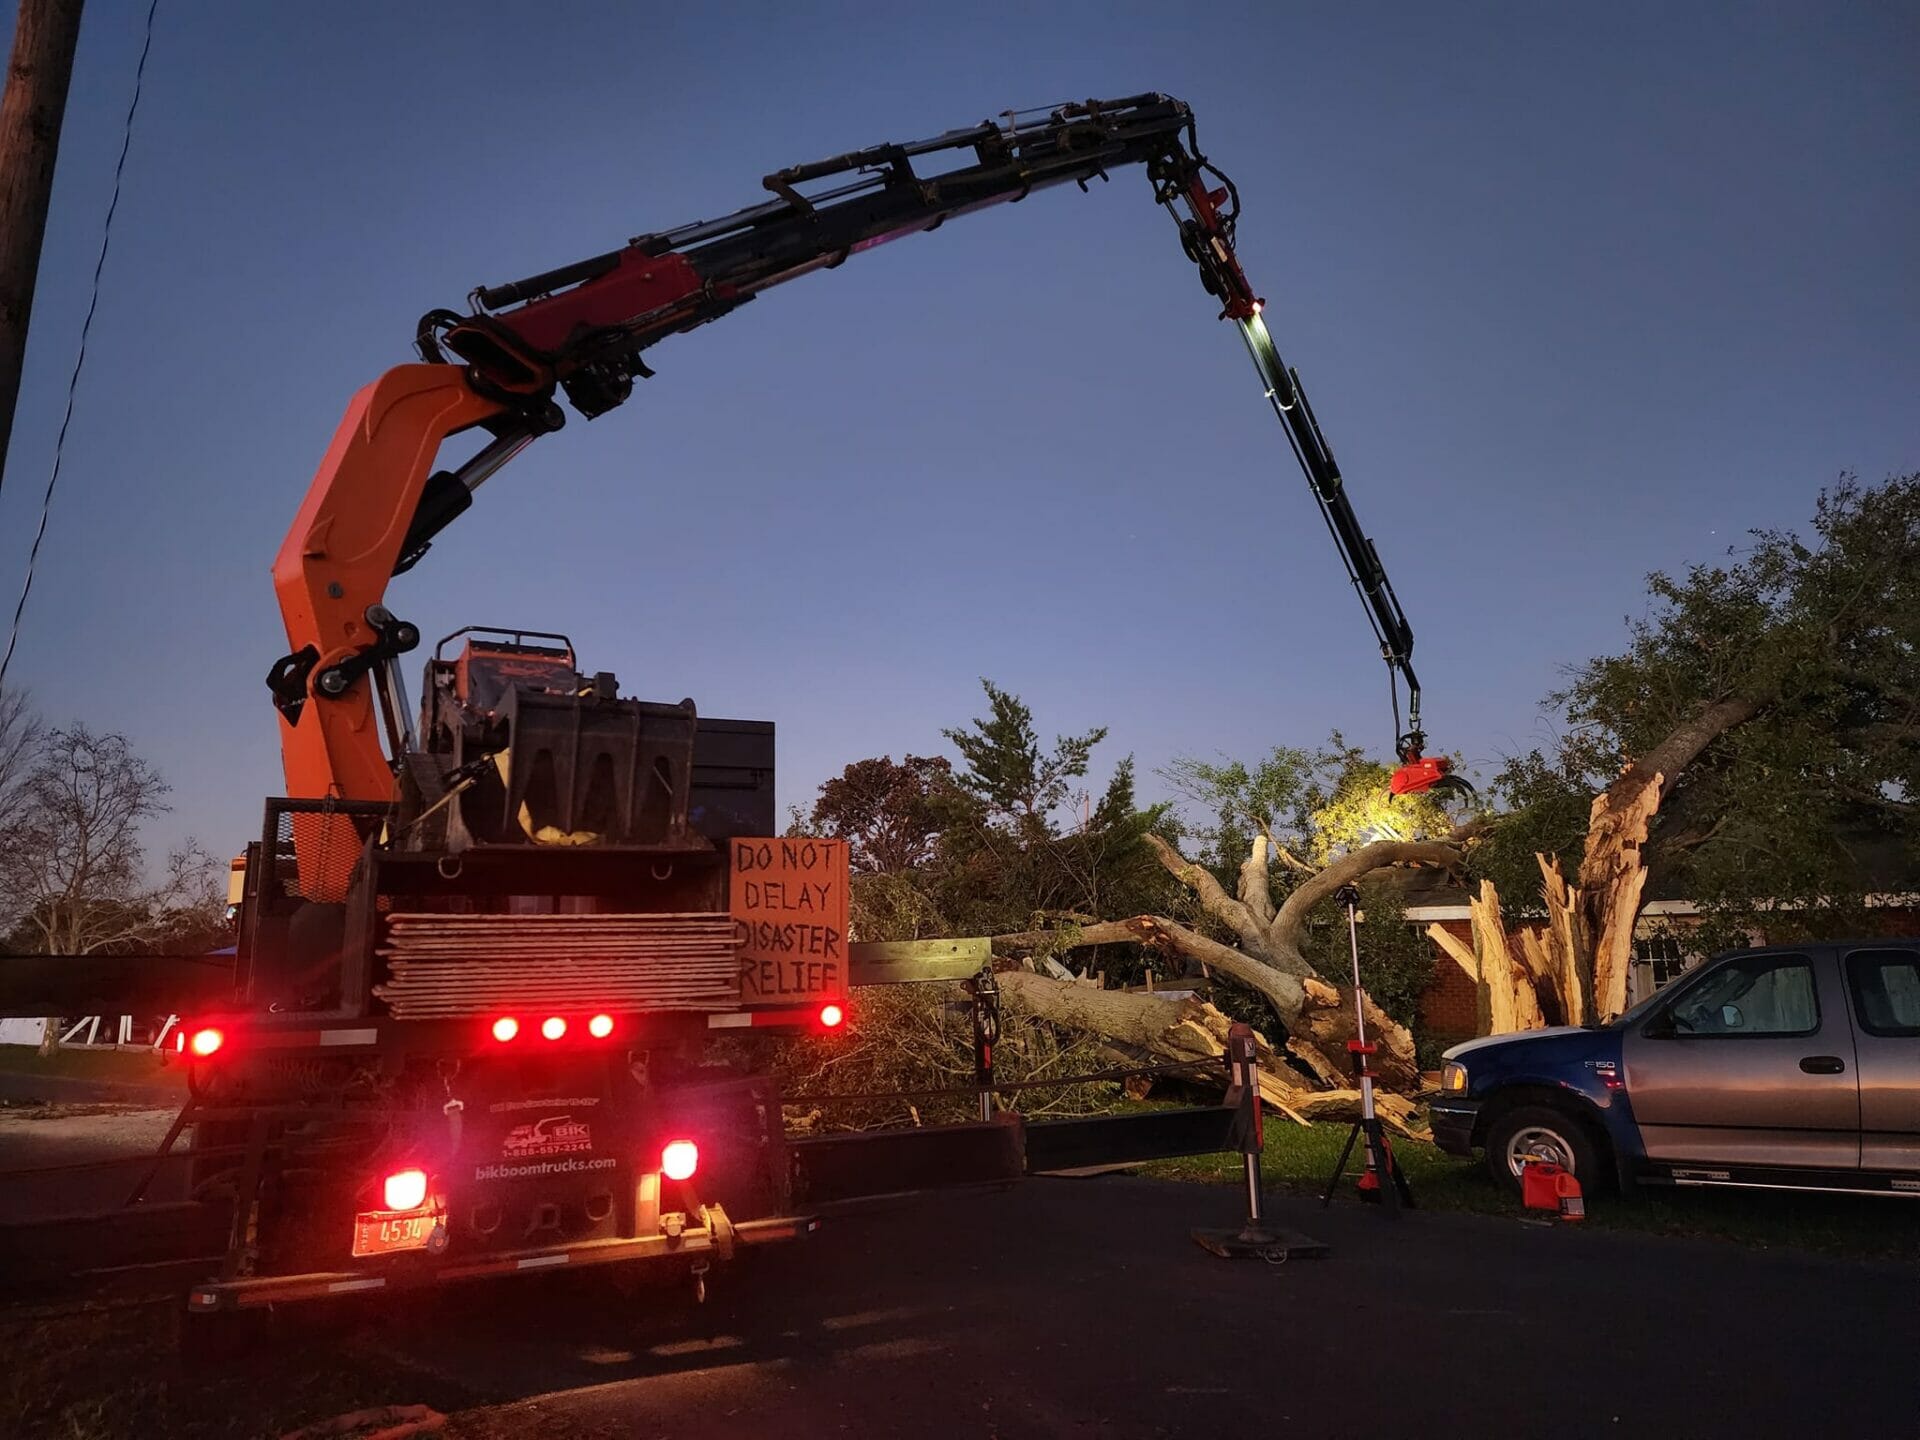 Crane truck used to help clean tree waste in yard